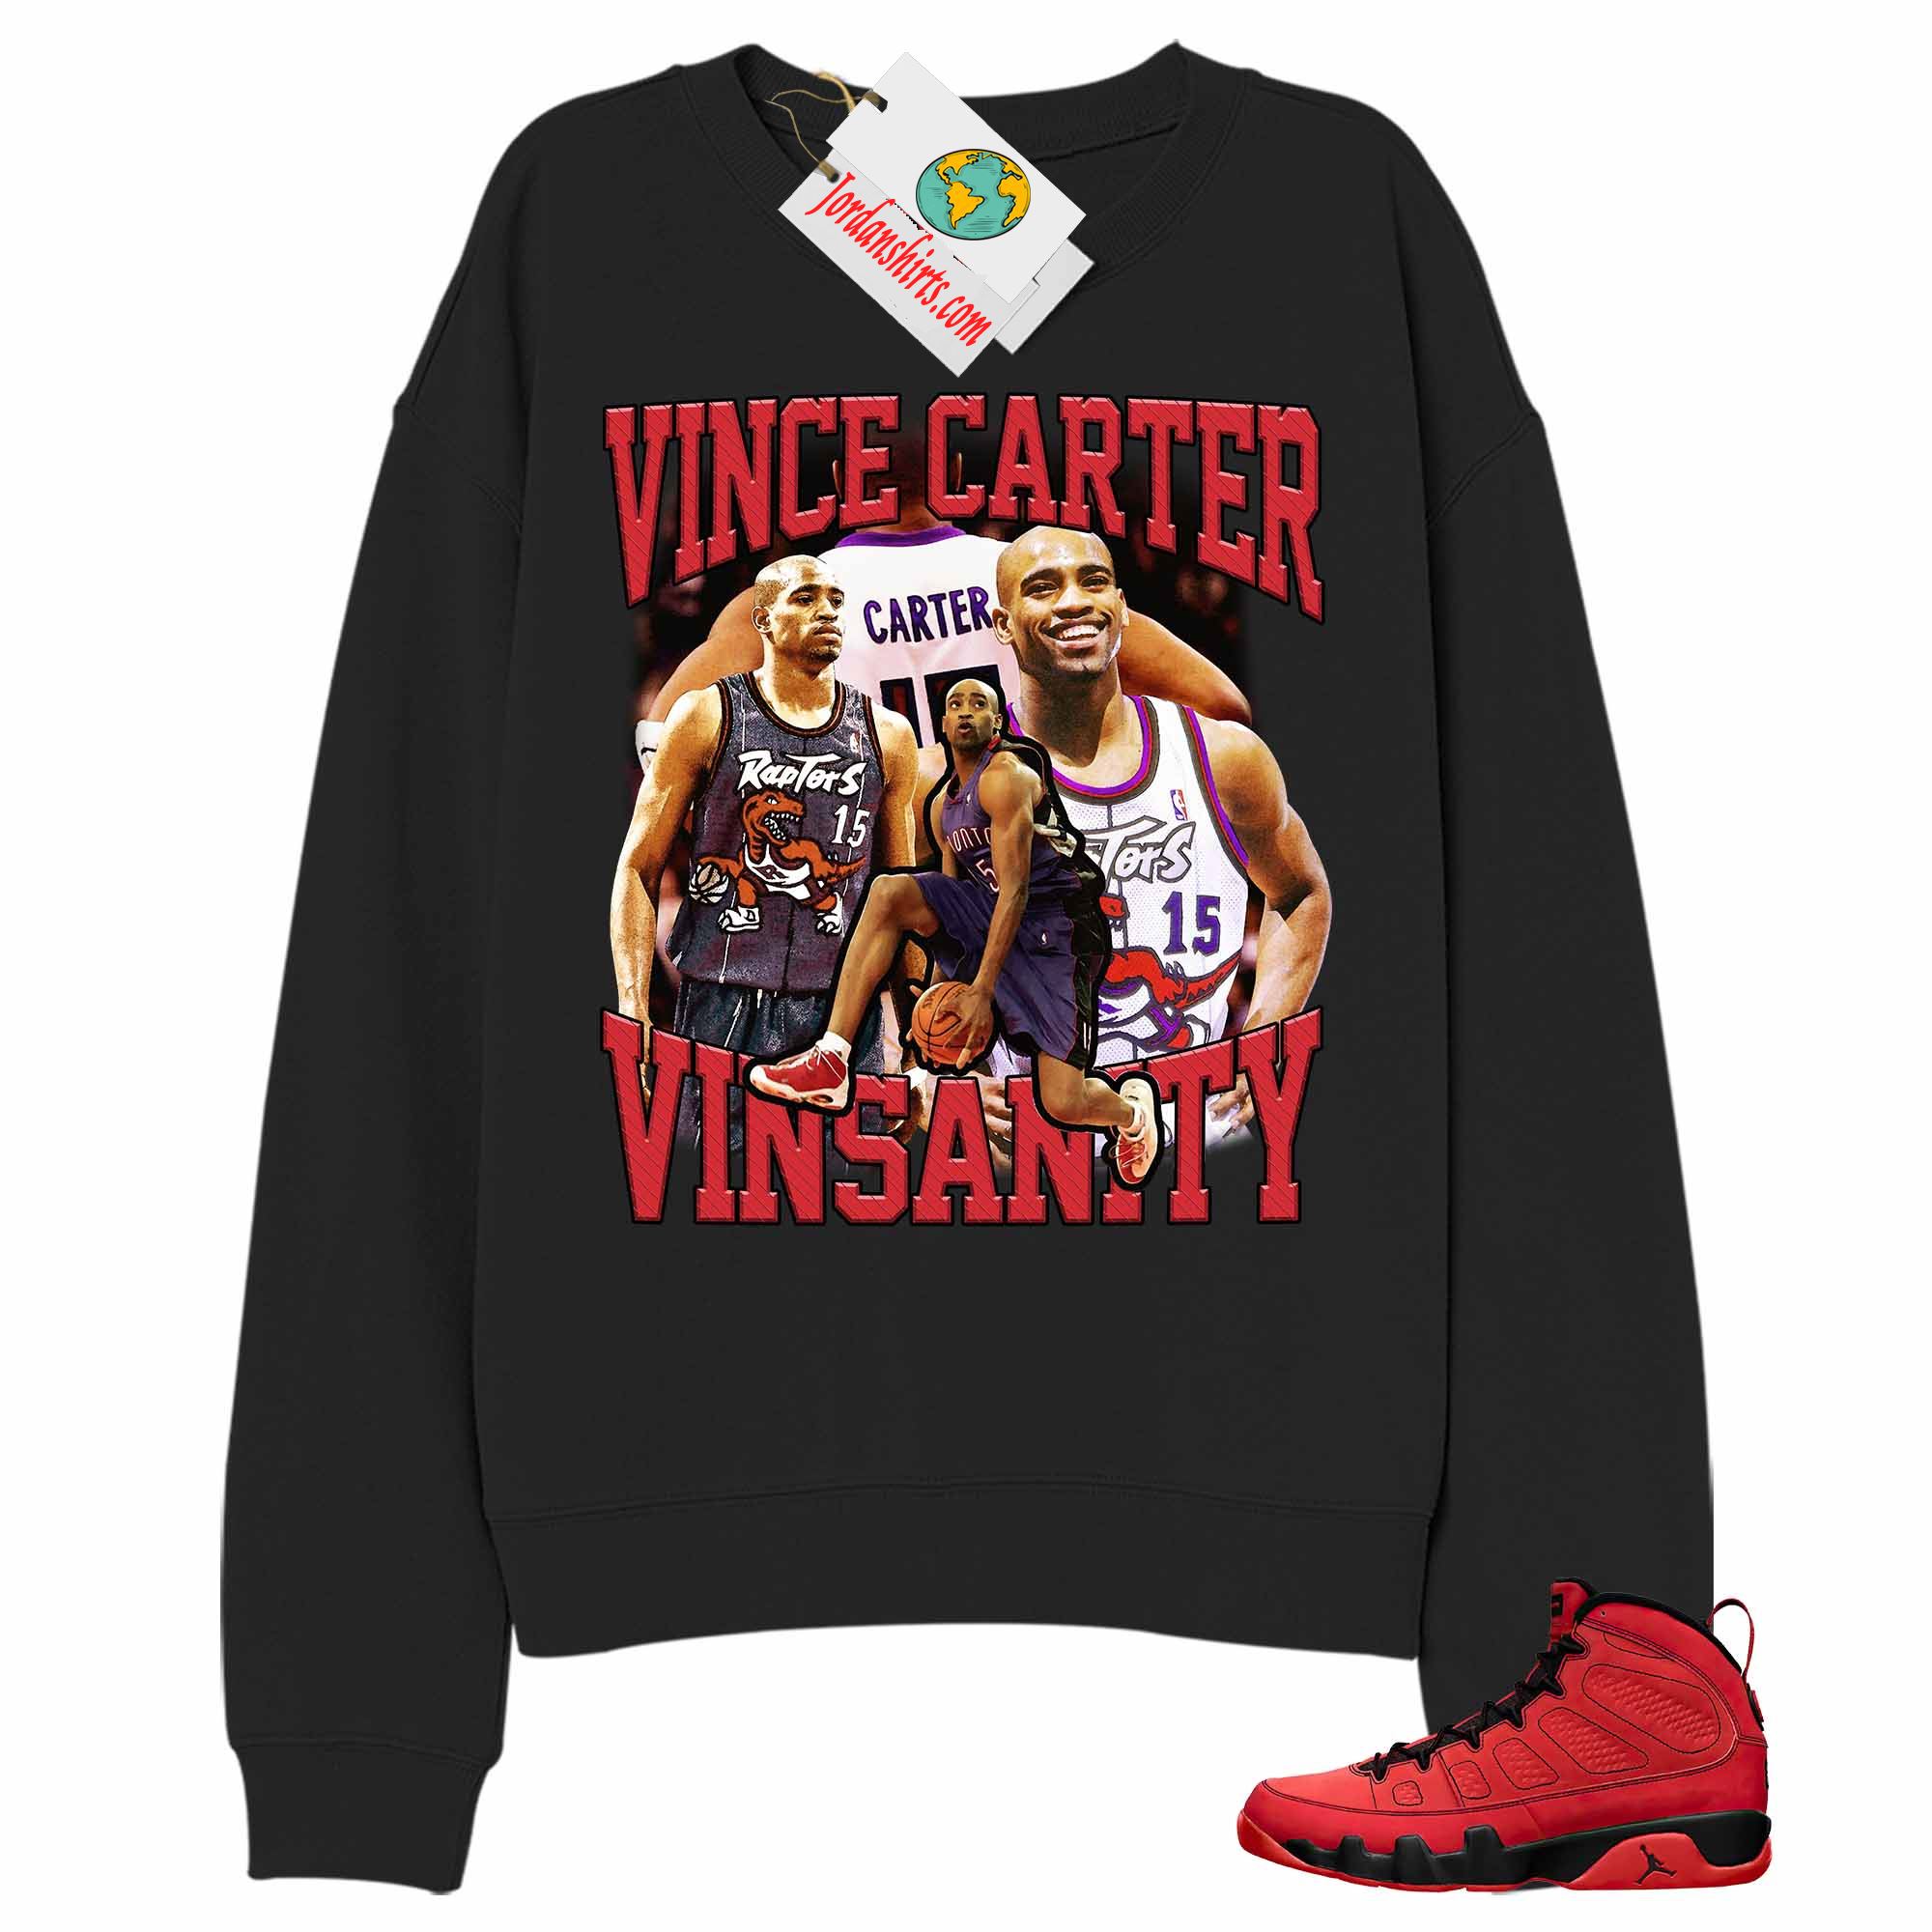 Jordan 9 Sweatshirt, Vince Carter Vinsanity Basketball 90s Retro Vintage Black Sweatshirt Air Jordan 9 Chile Red 9s Plus Size Up To 5xl